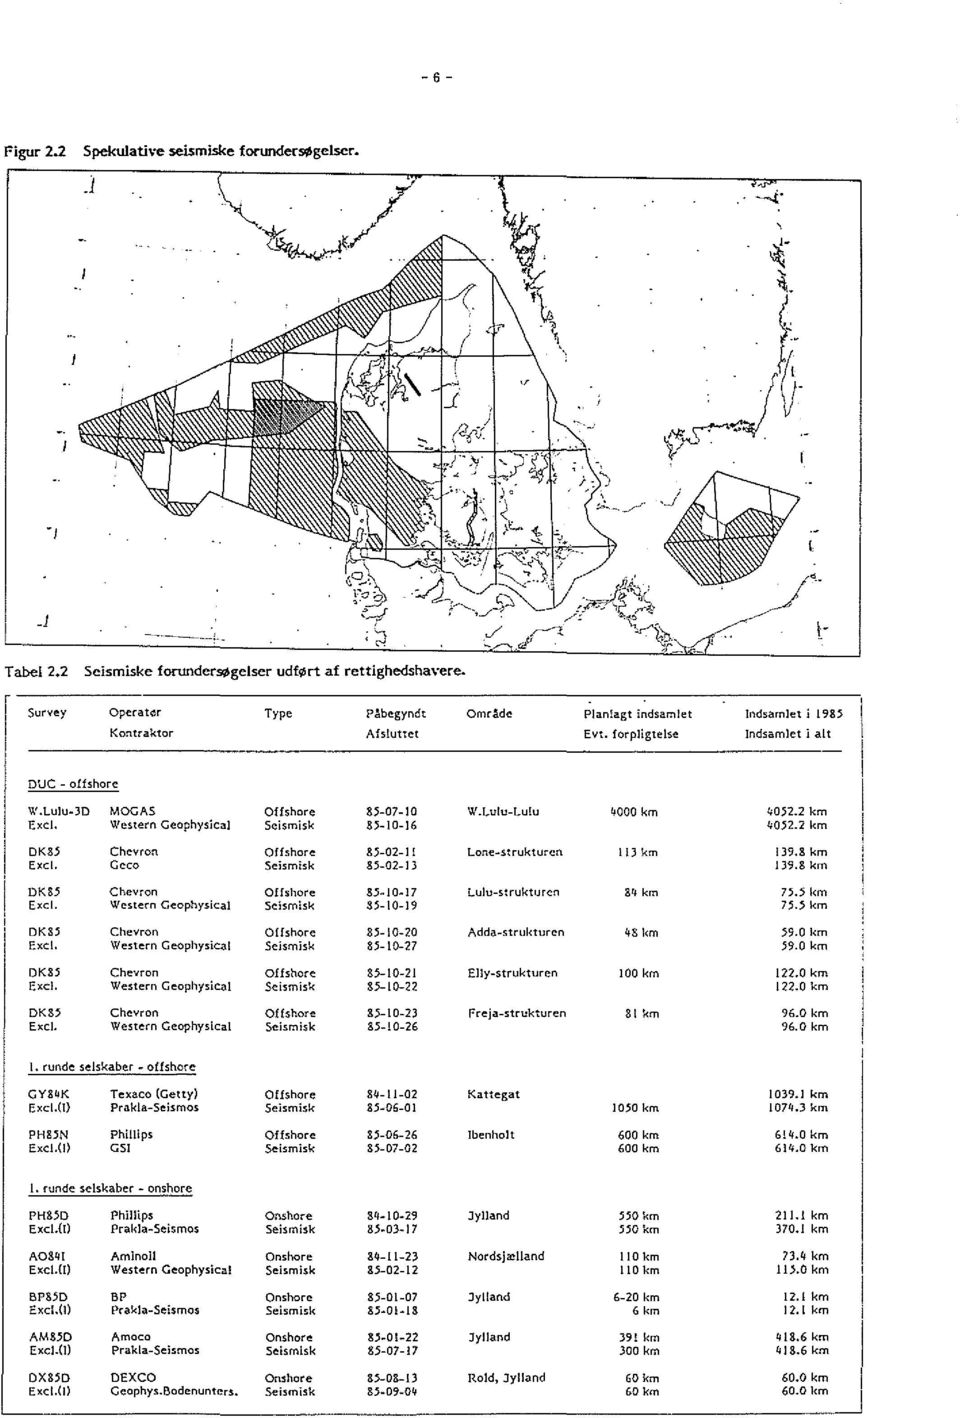 2 km Exc. Western Geophysica Seismisk 8.:5-10-16 4052.2 km DK85 Chevron Offshore 85-02-11 Lone-strukturen!J km!39.8 km Exe!. Gcco Seismisk 85-02-13 139.